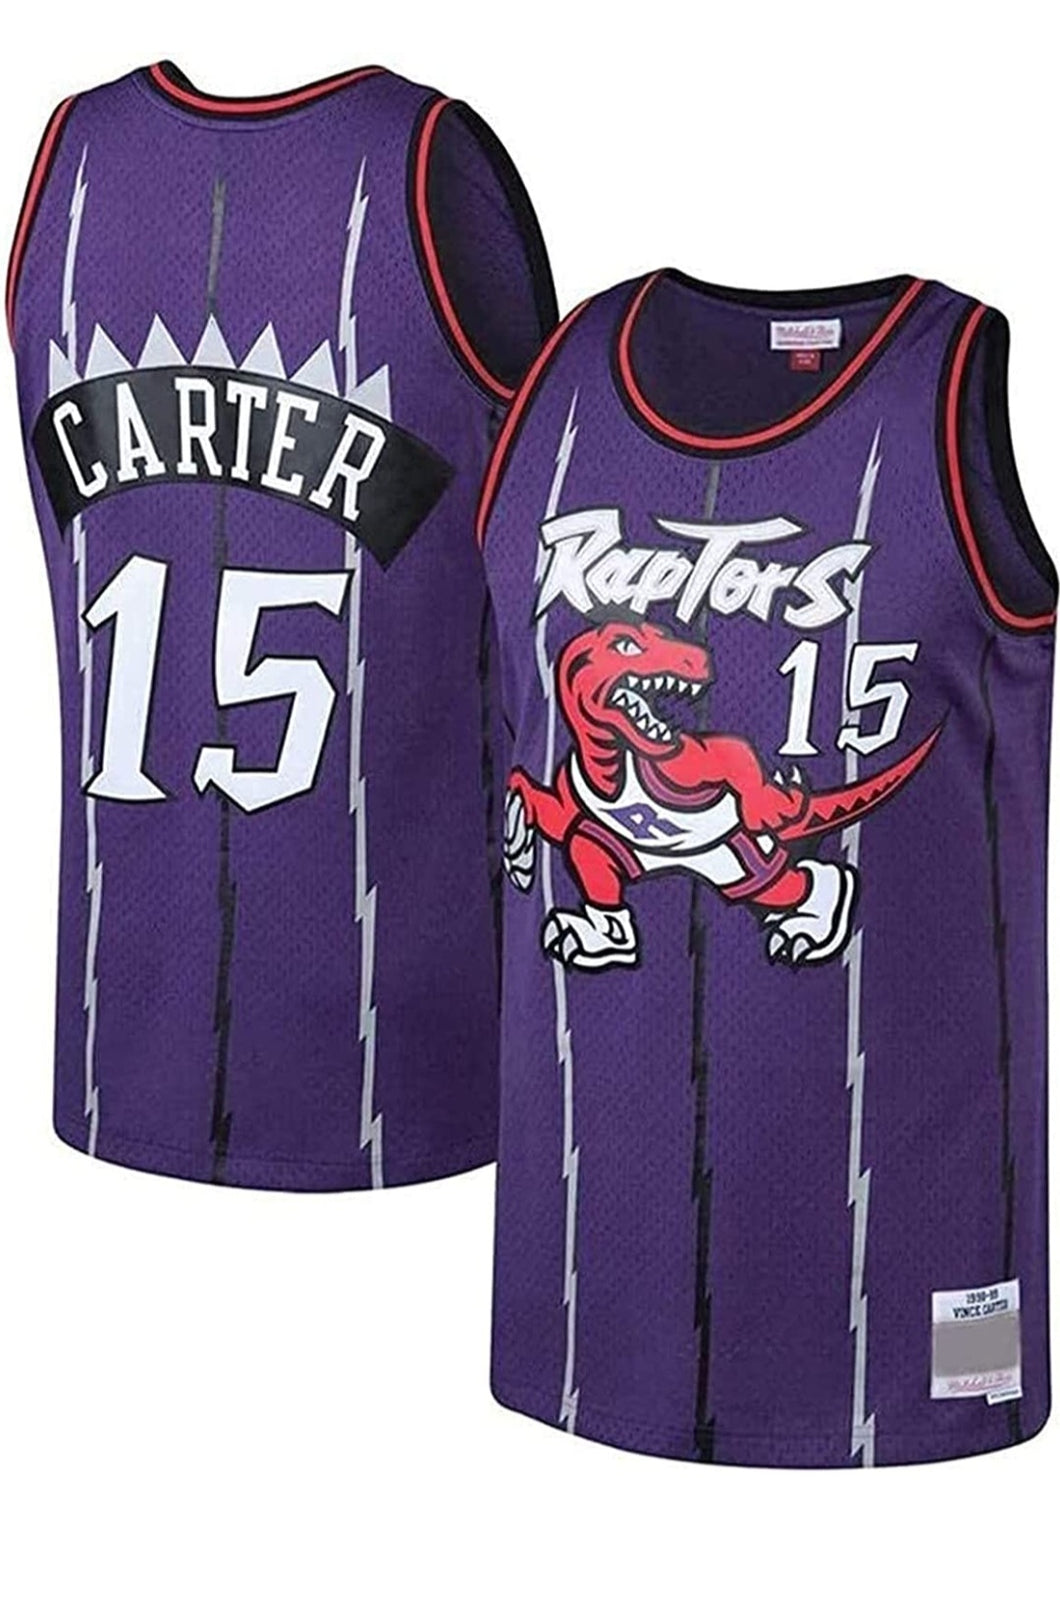 Vince Carter Purple #15 Raptors Kids Jersey